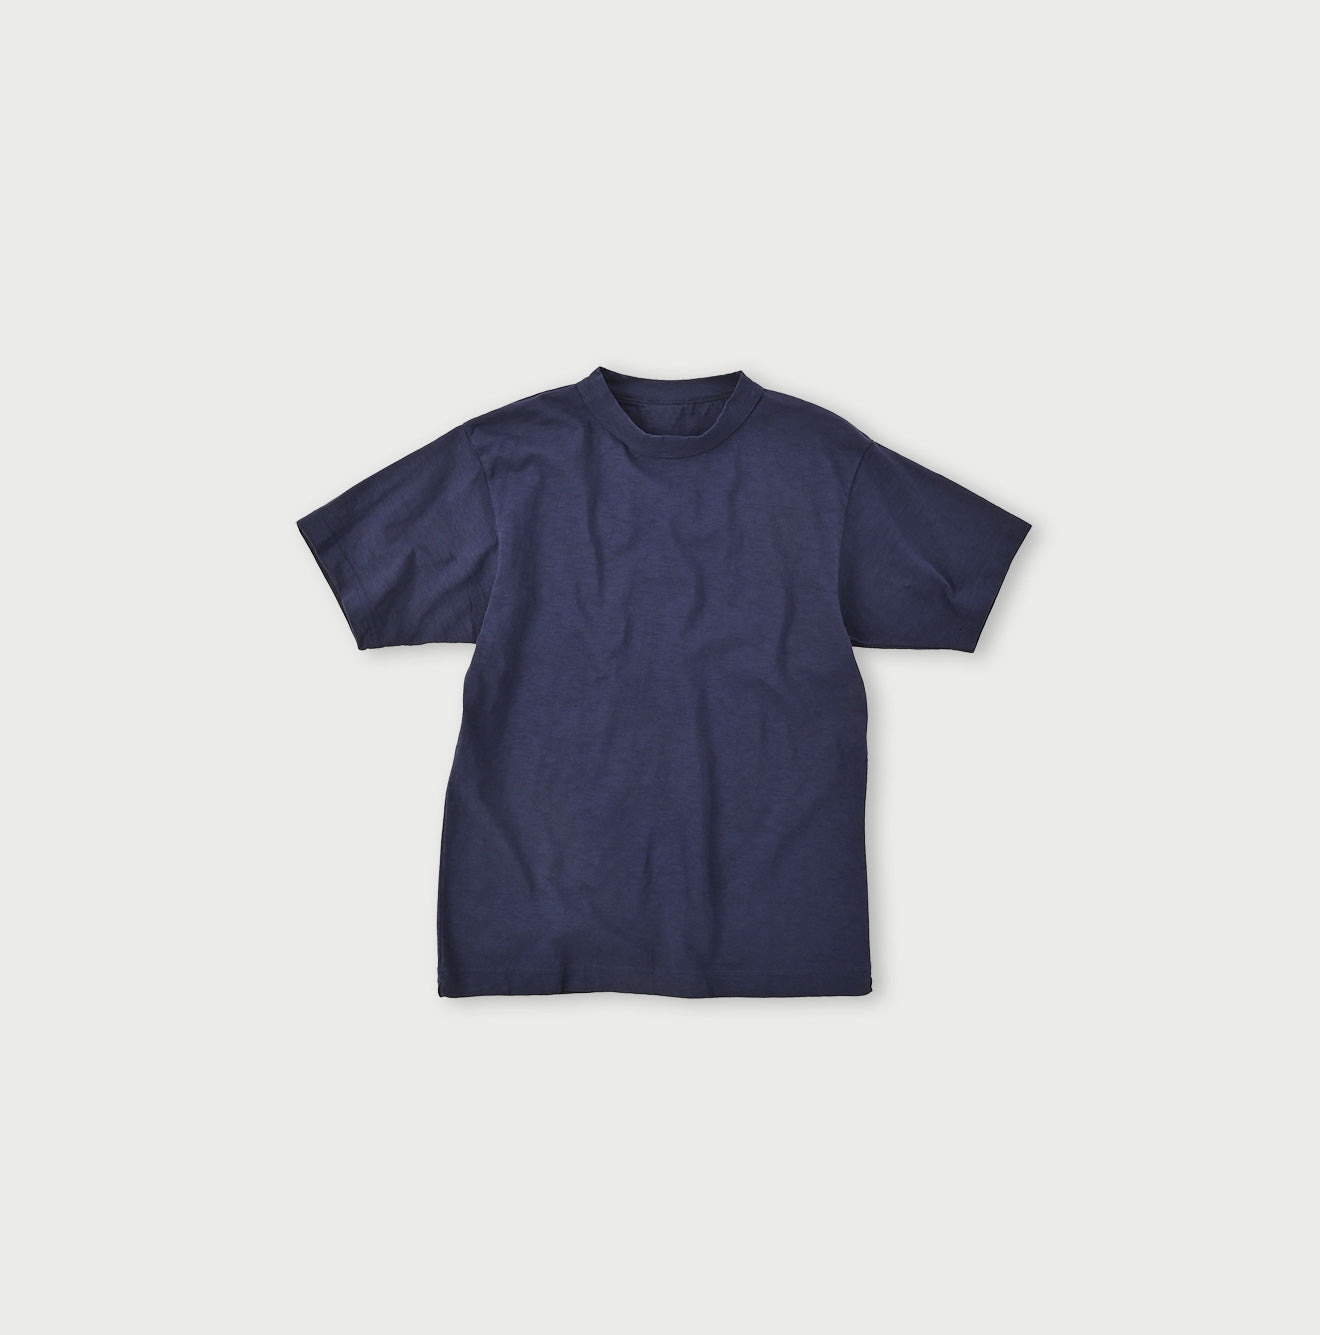 908 45 Star T-shirt